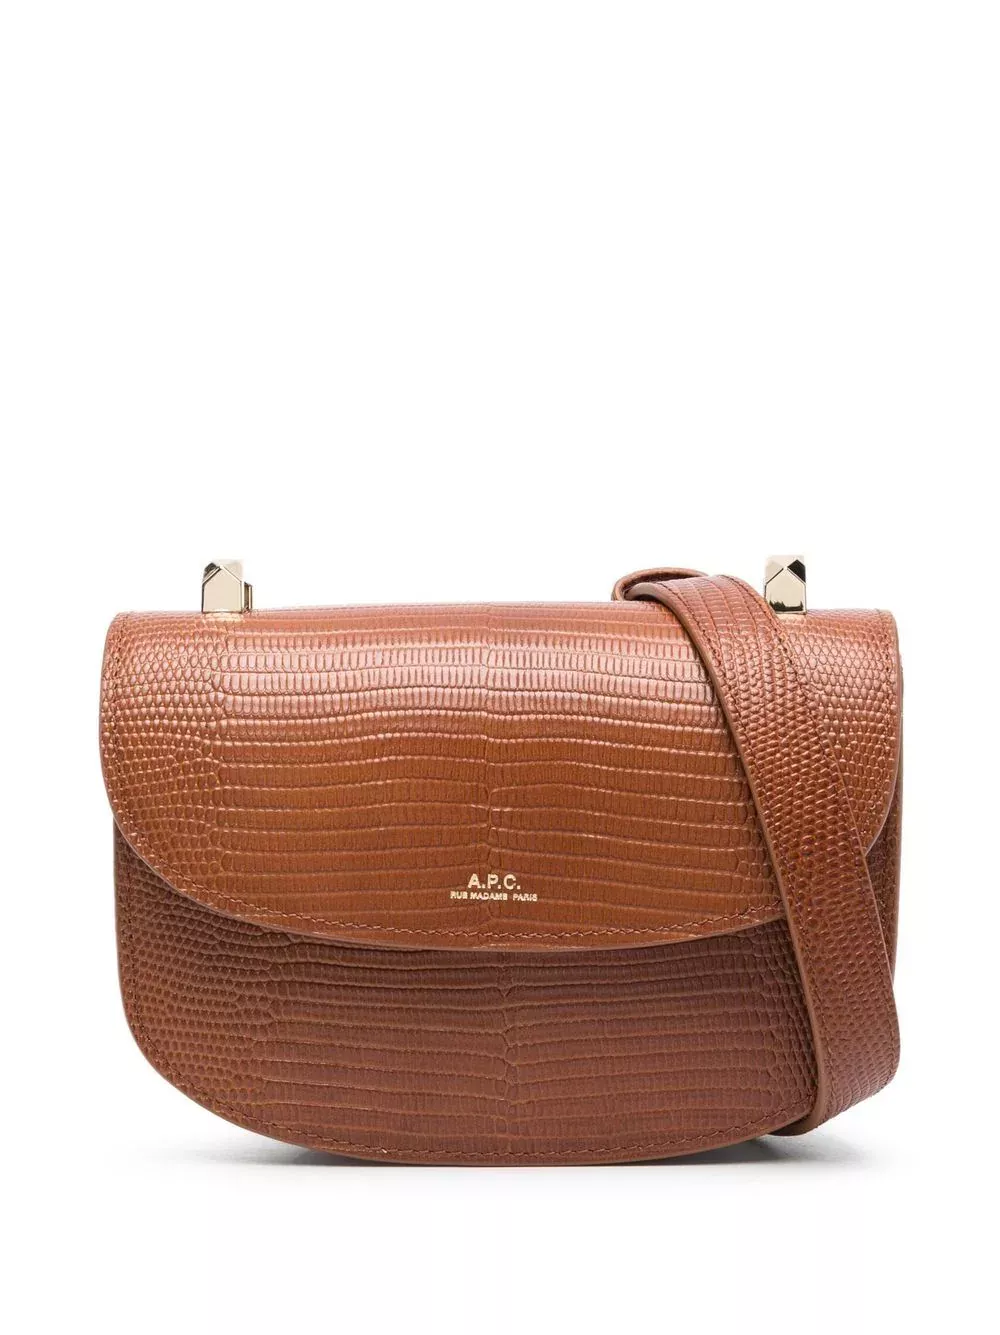 BoxCar Bag – AudreyModern